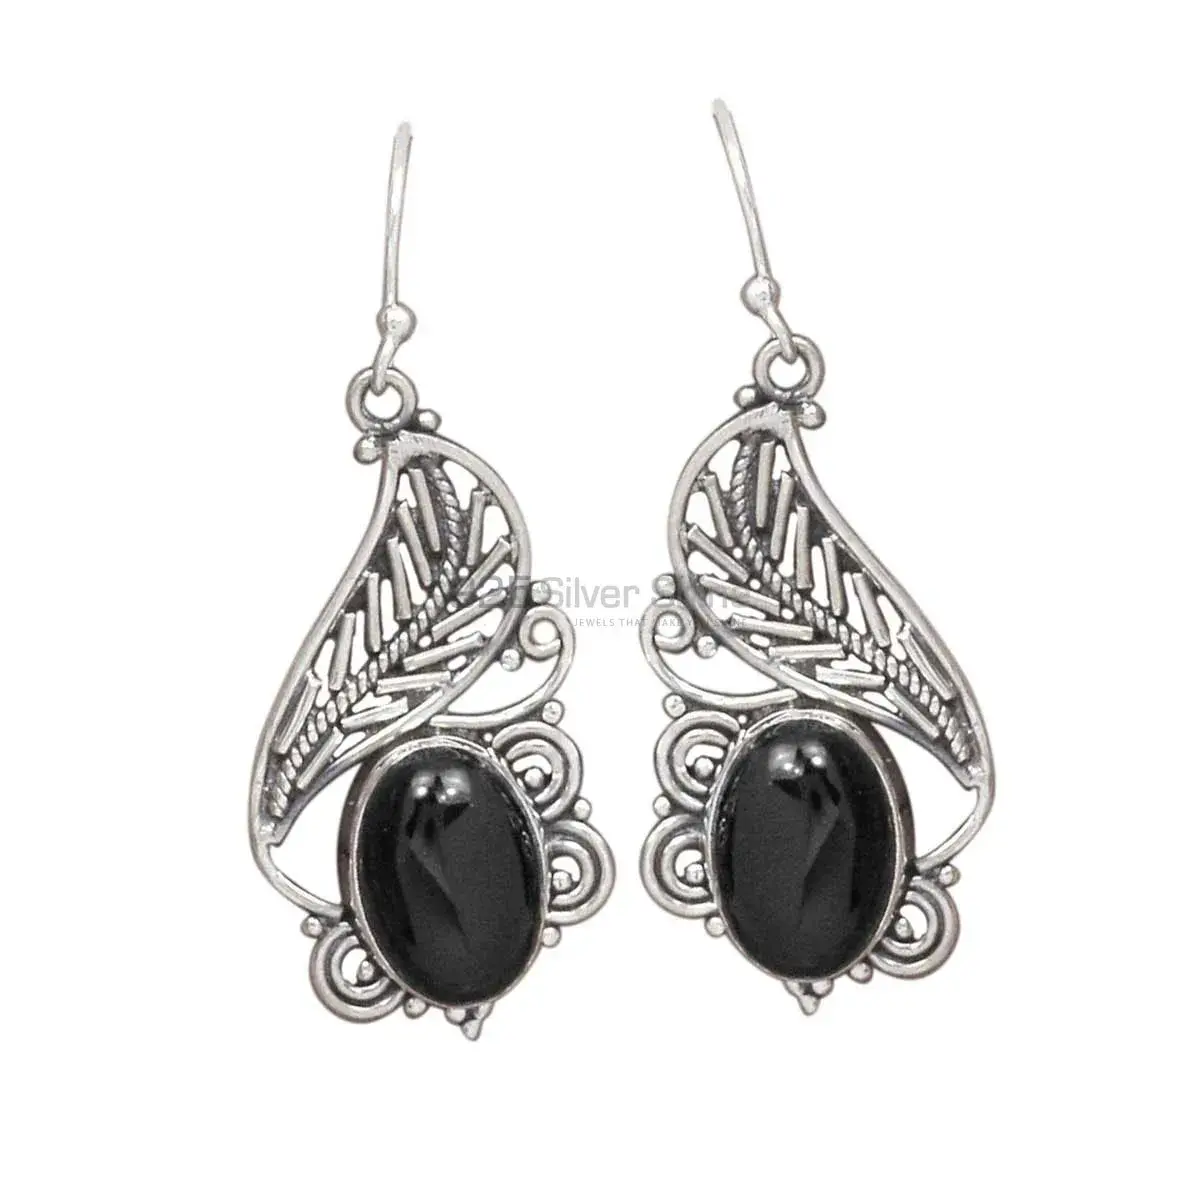 Unique 925 Sterling Silver Handmade Earrings Suppliers In Black Onyx Gemstone Jewelry 925SE2955